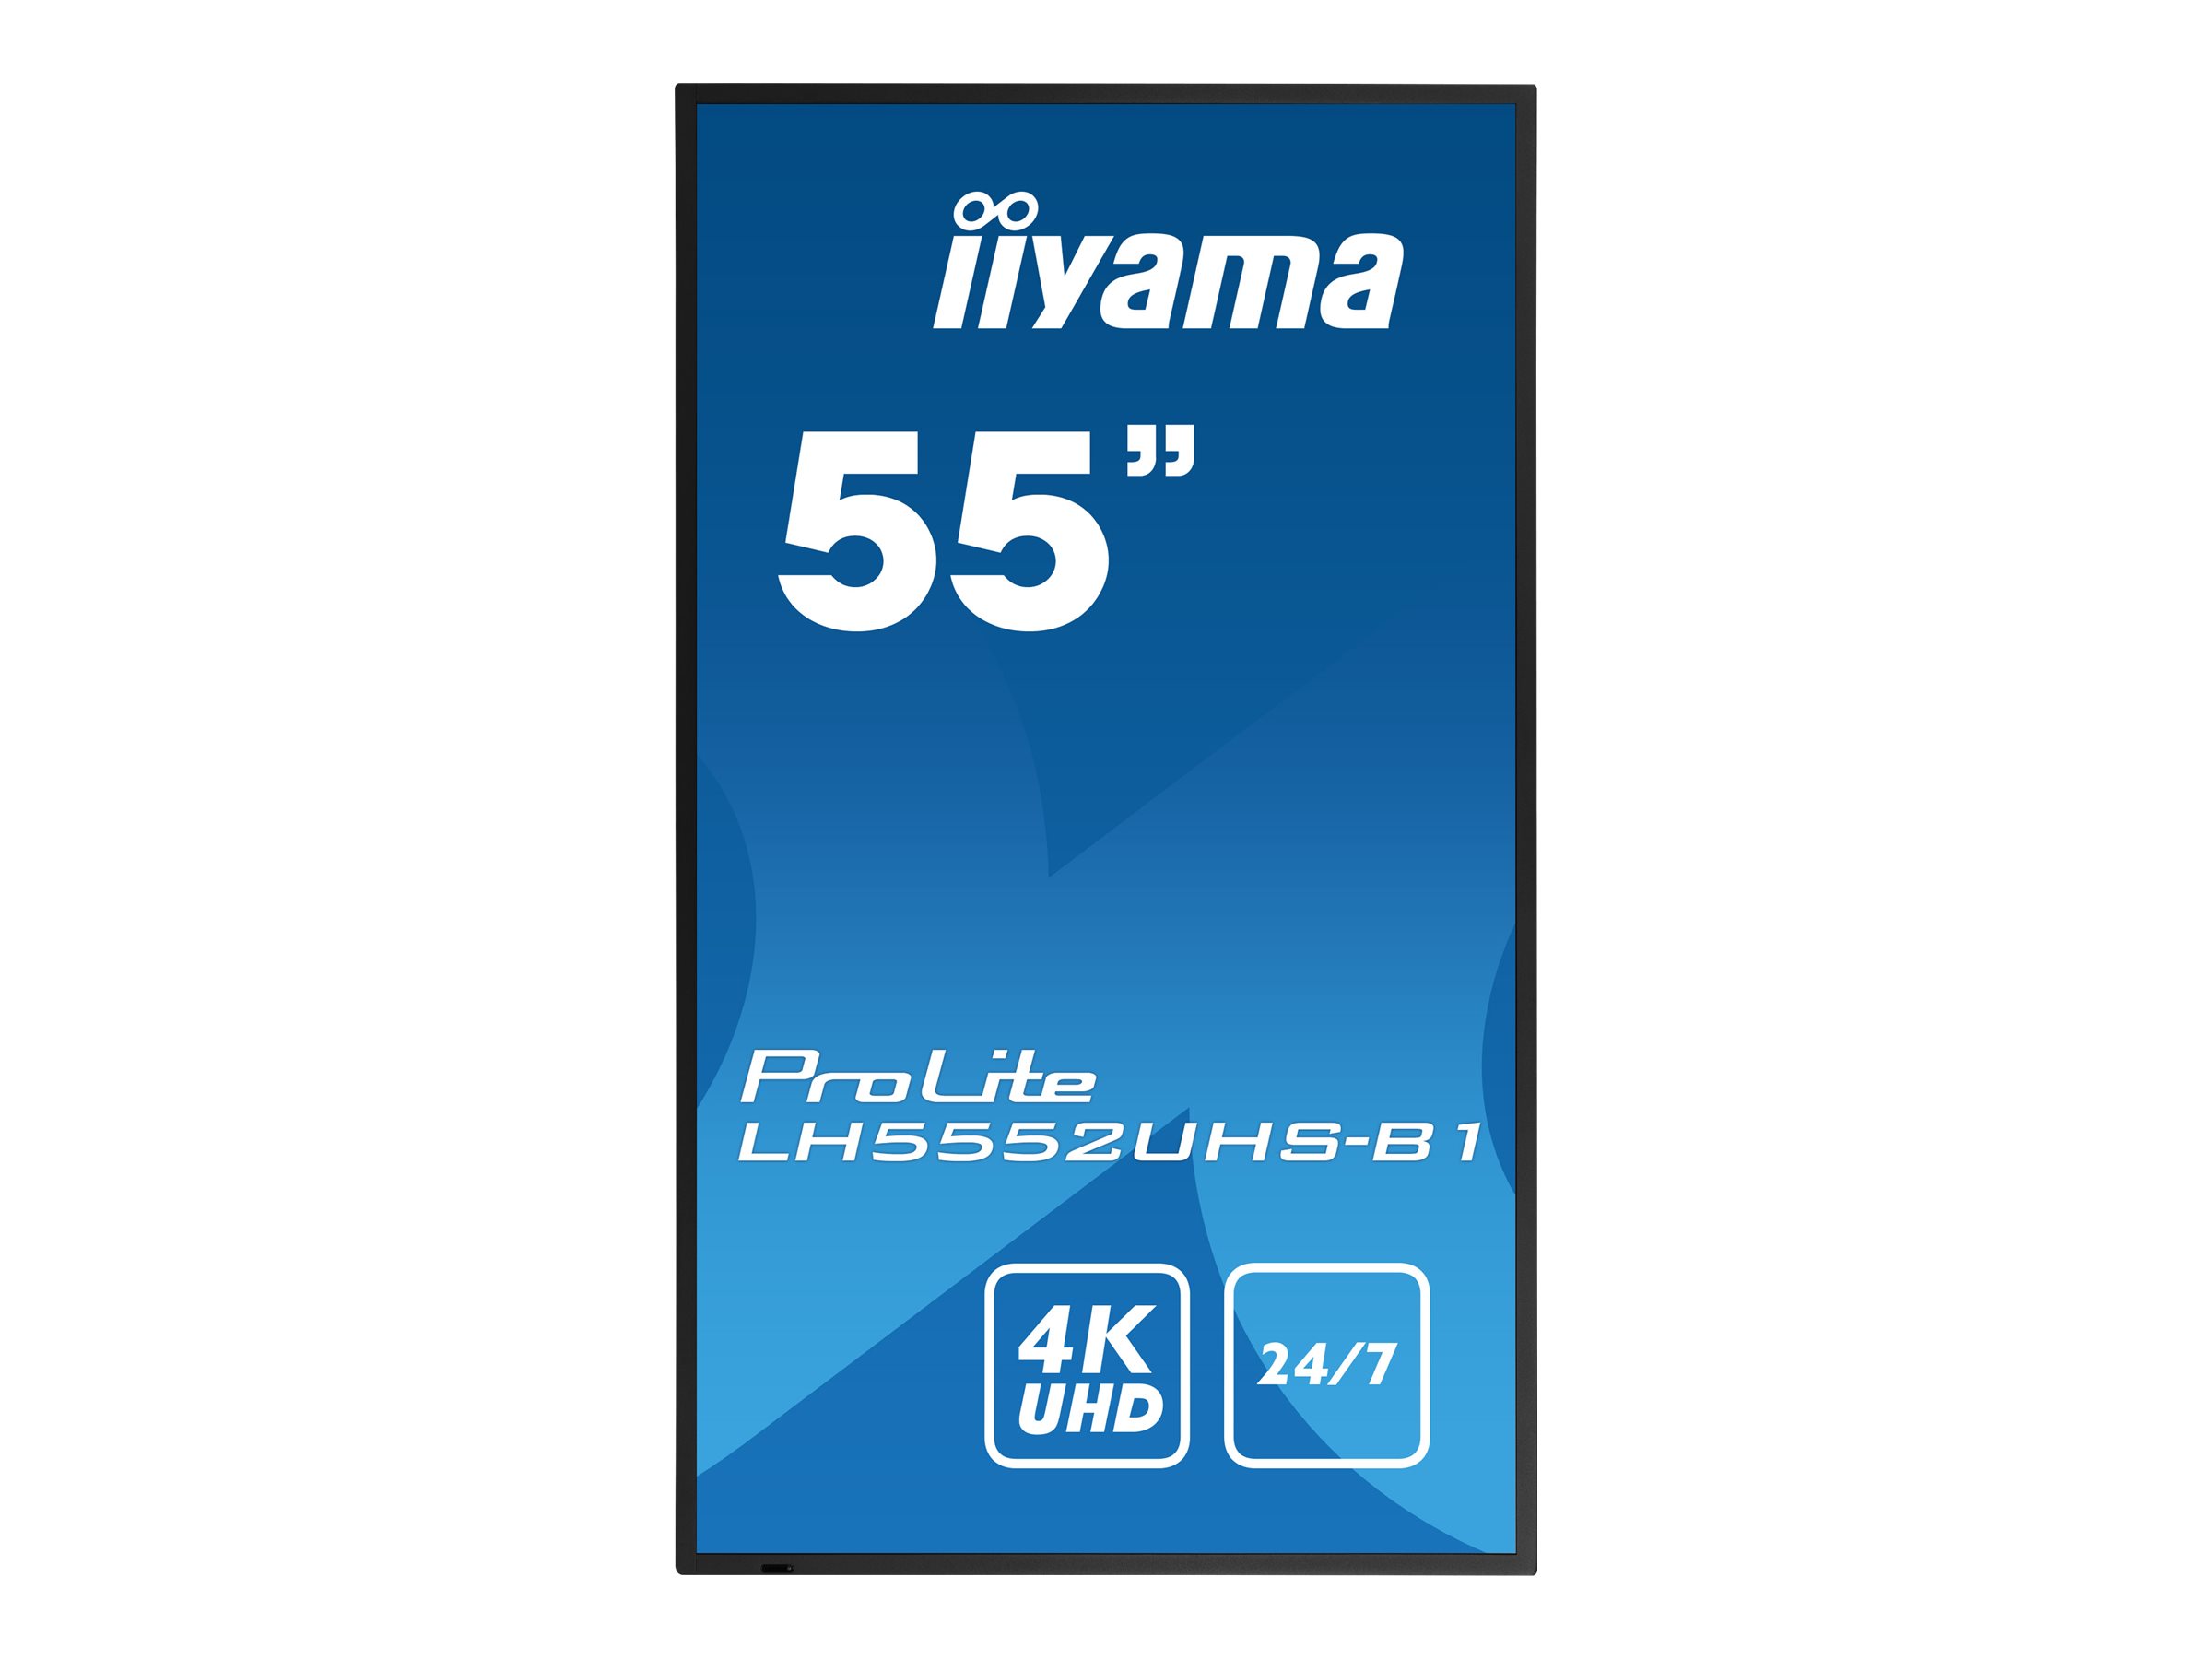 Iiyama 55 LH5552UHS-B1 VGA DVI HDMI DP USB